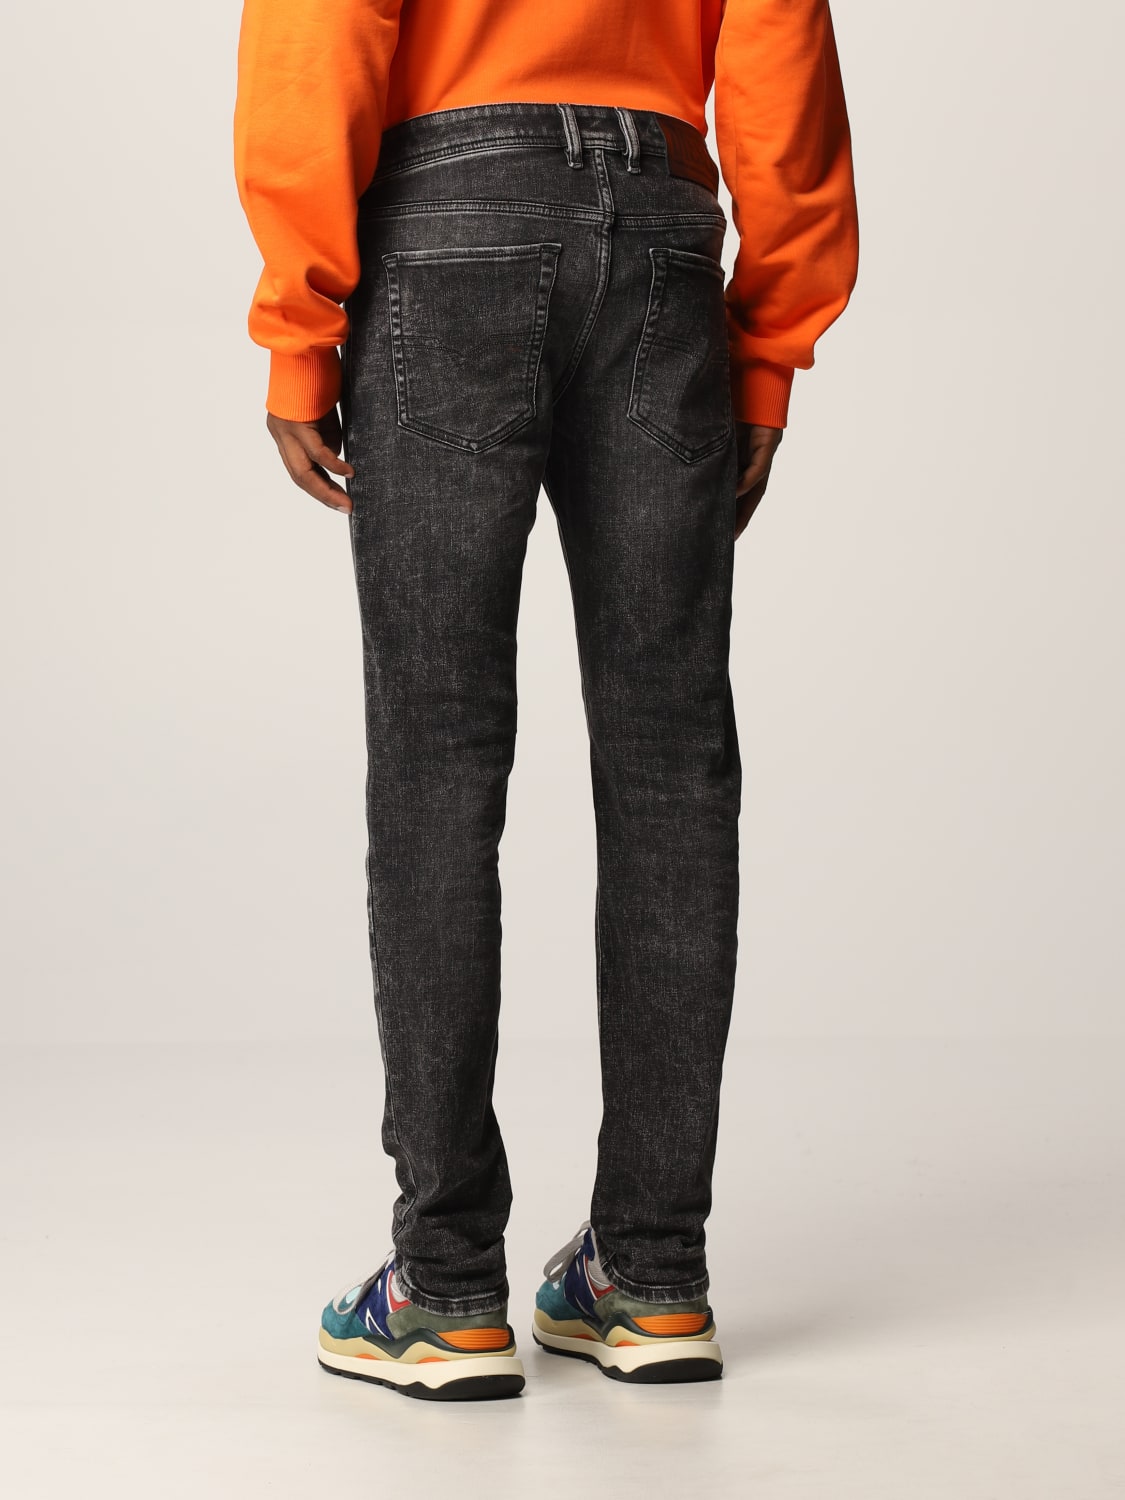 DIESEL: 5-pocket jeans in washed denim Black | Diesel jeans 00SWJE 09A17 online on GIGLIO.COM